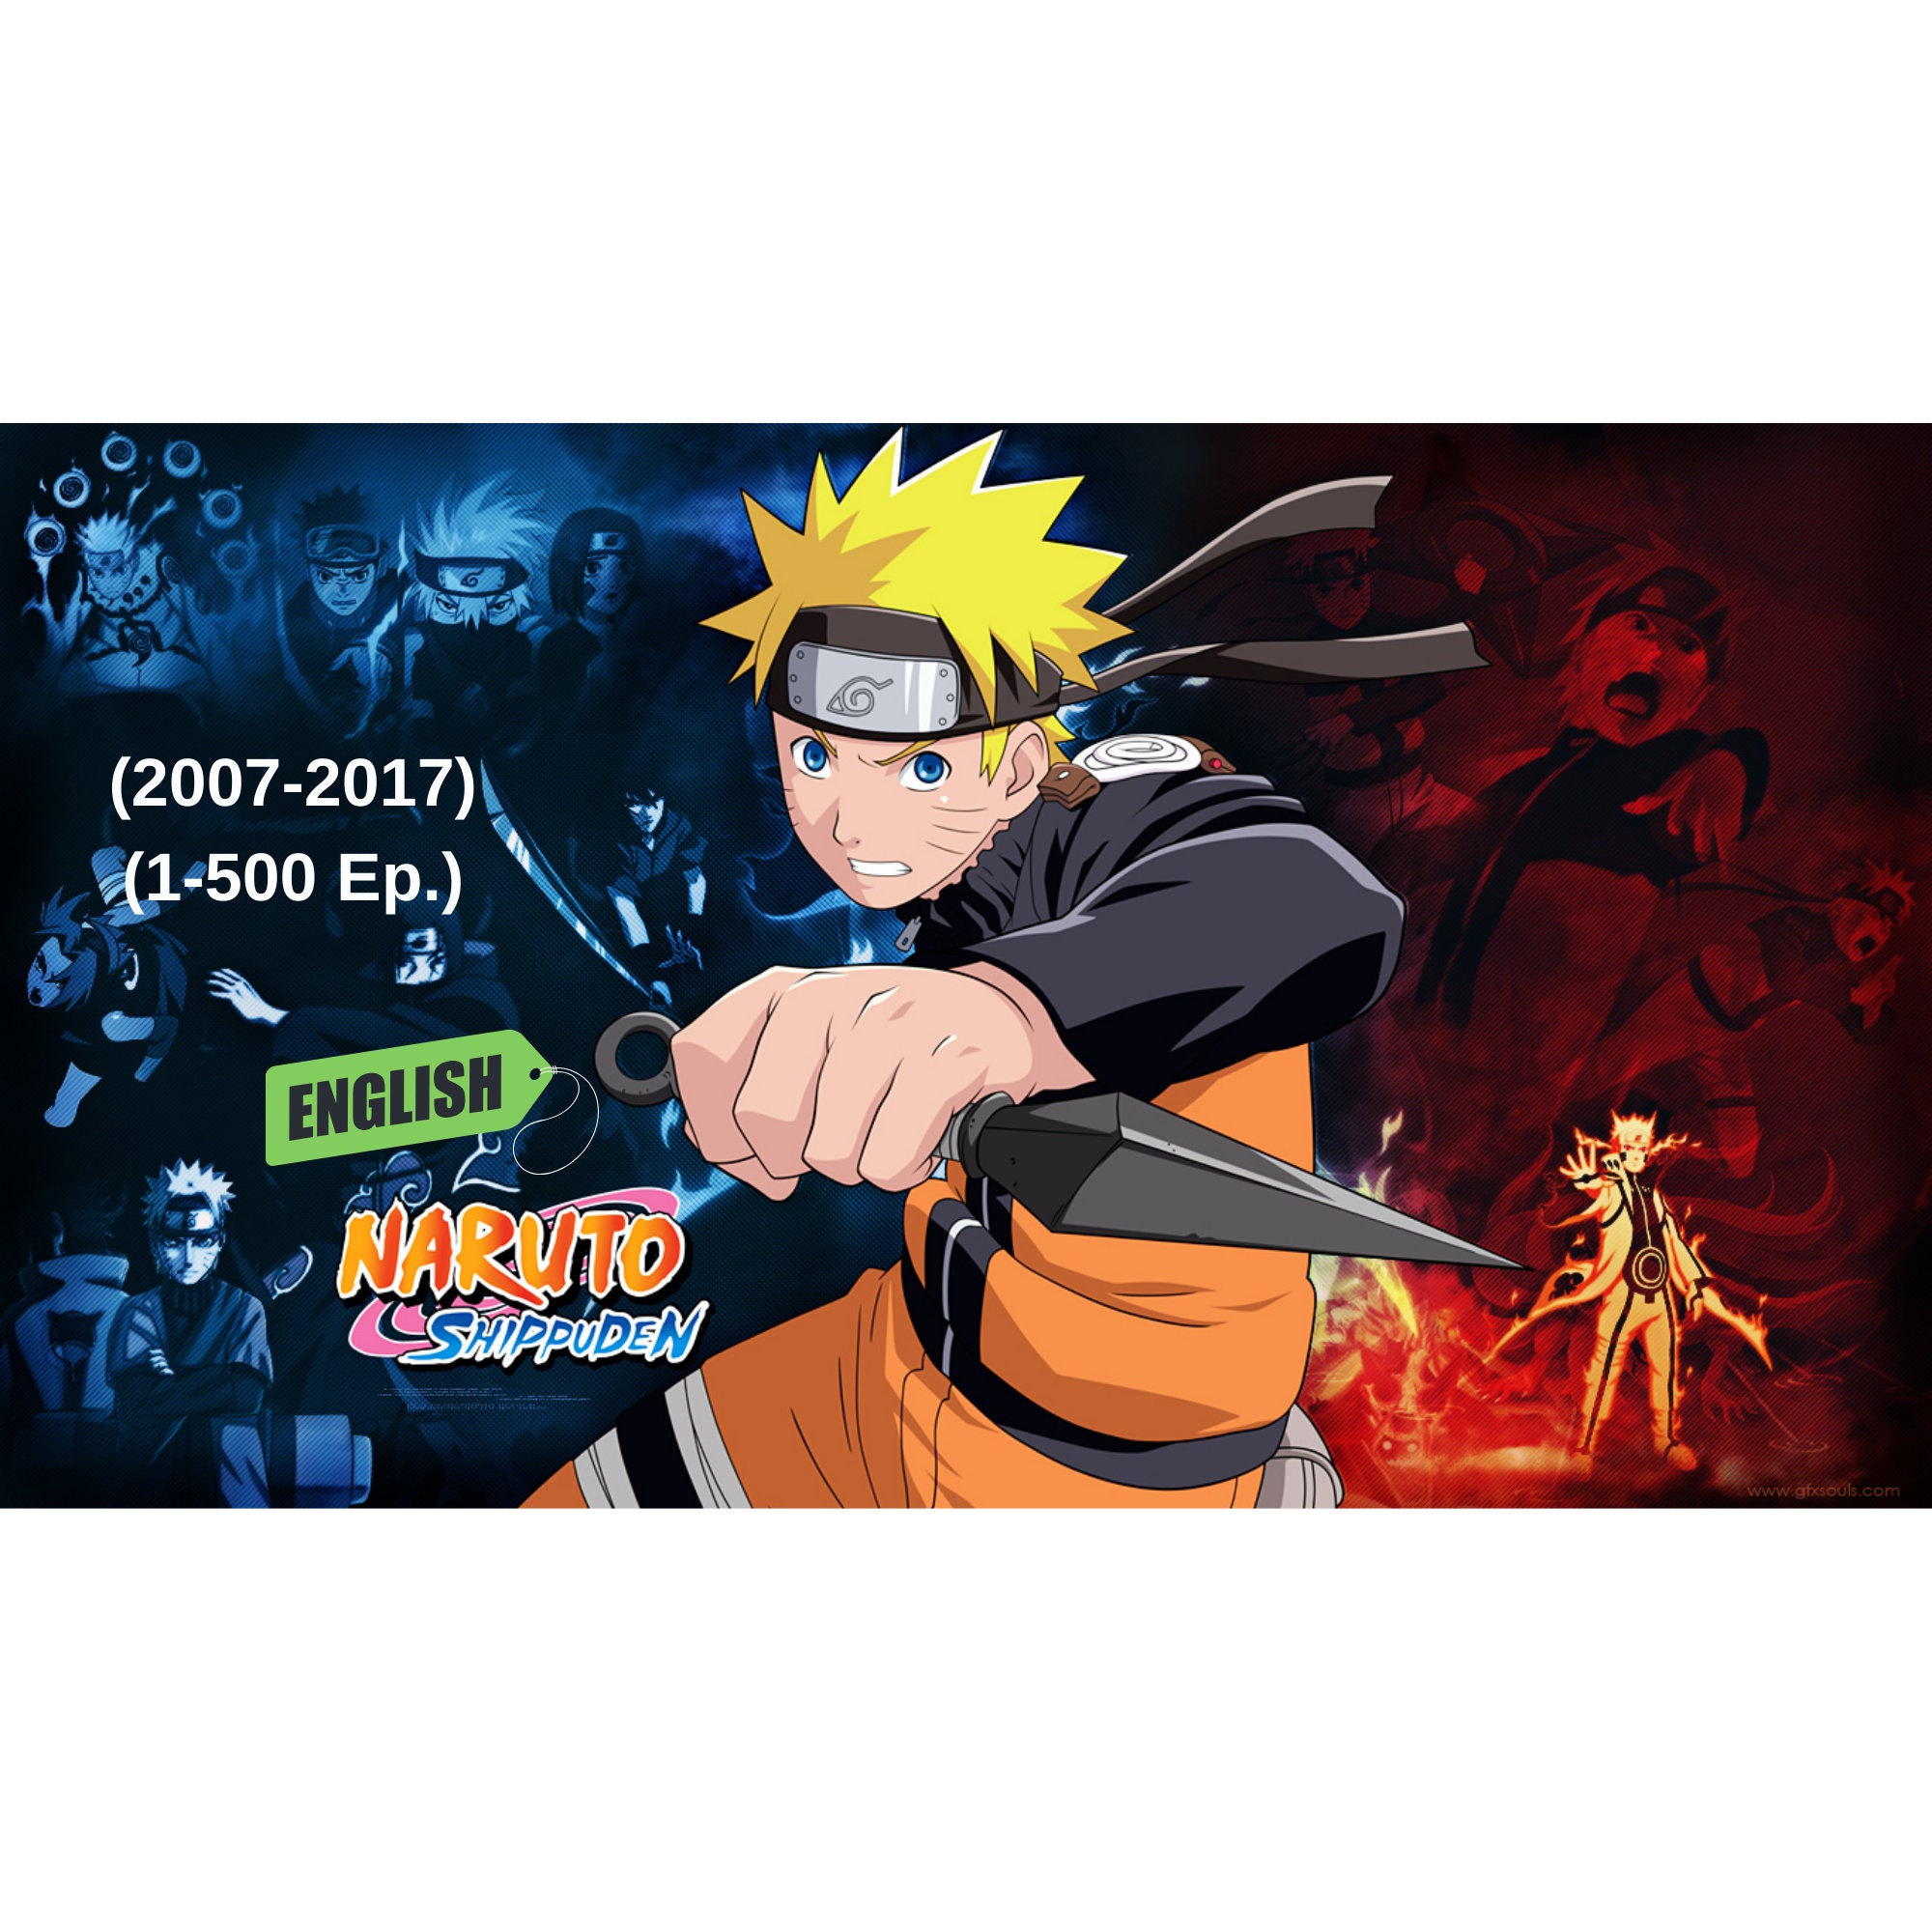 Anime DVD Naruto Shippuden ( Episode 1-500 End ) English Dubbed + 11 Movie  FedEx